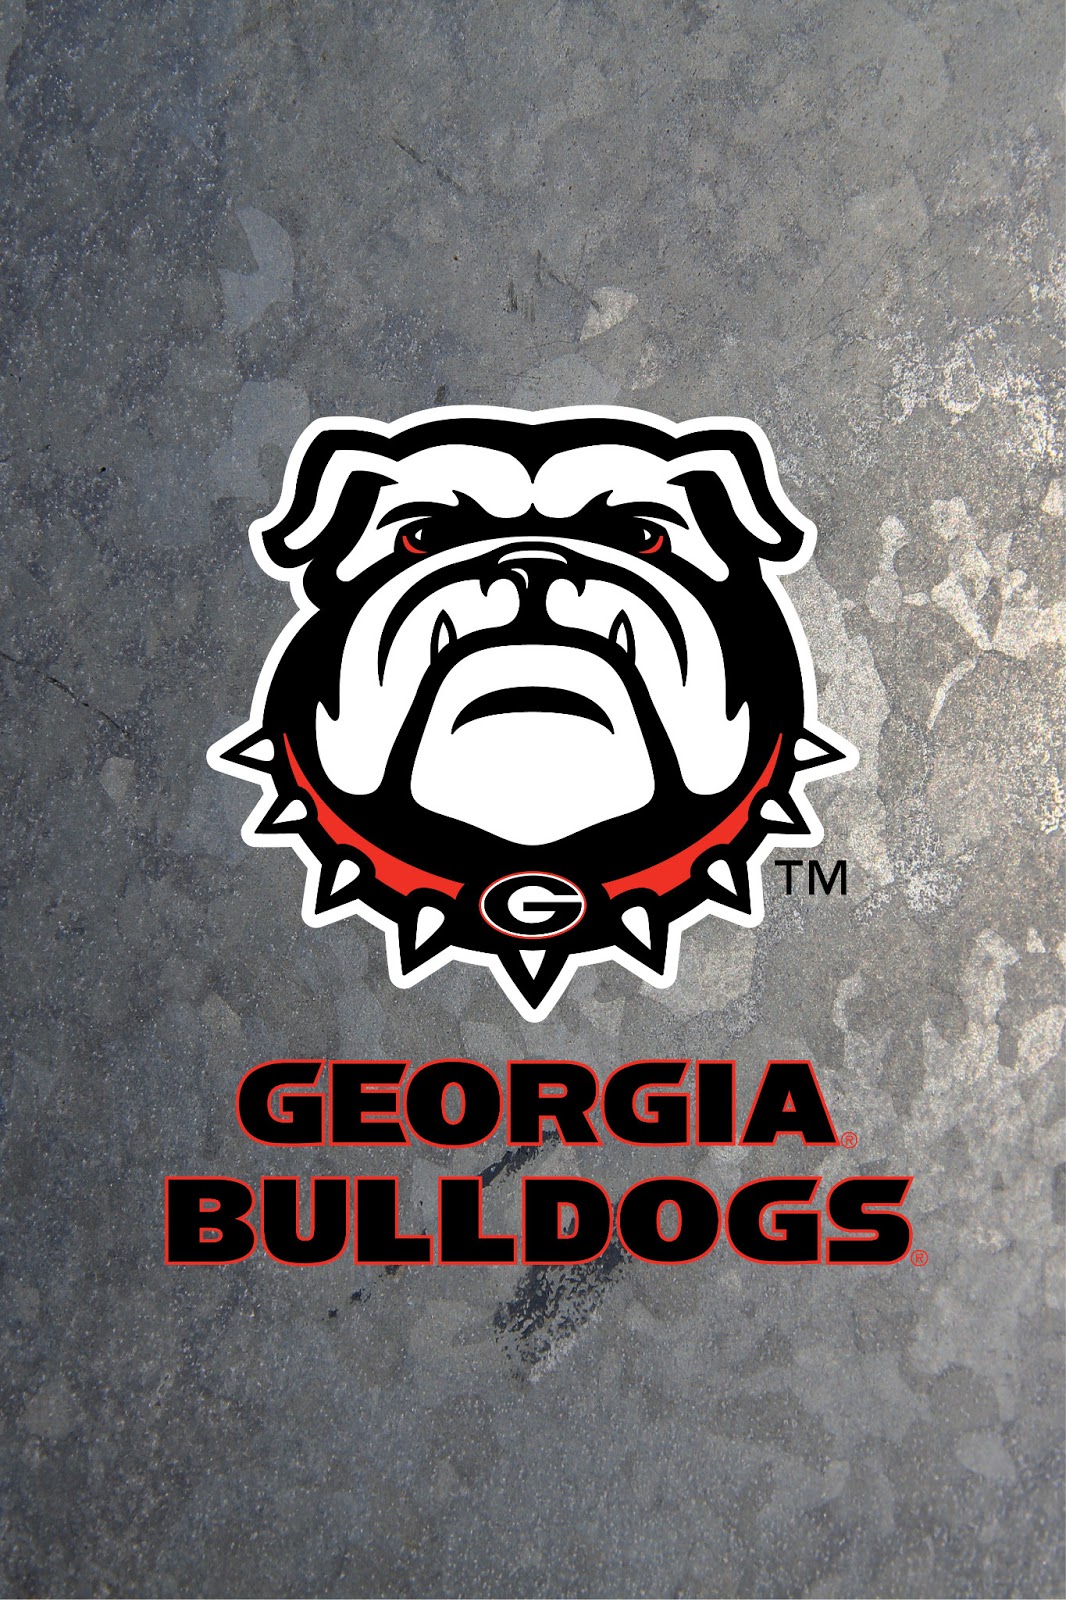 Georgia Bulldogs Wallpaper 4s With The New